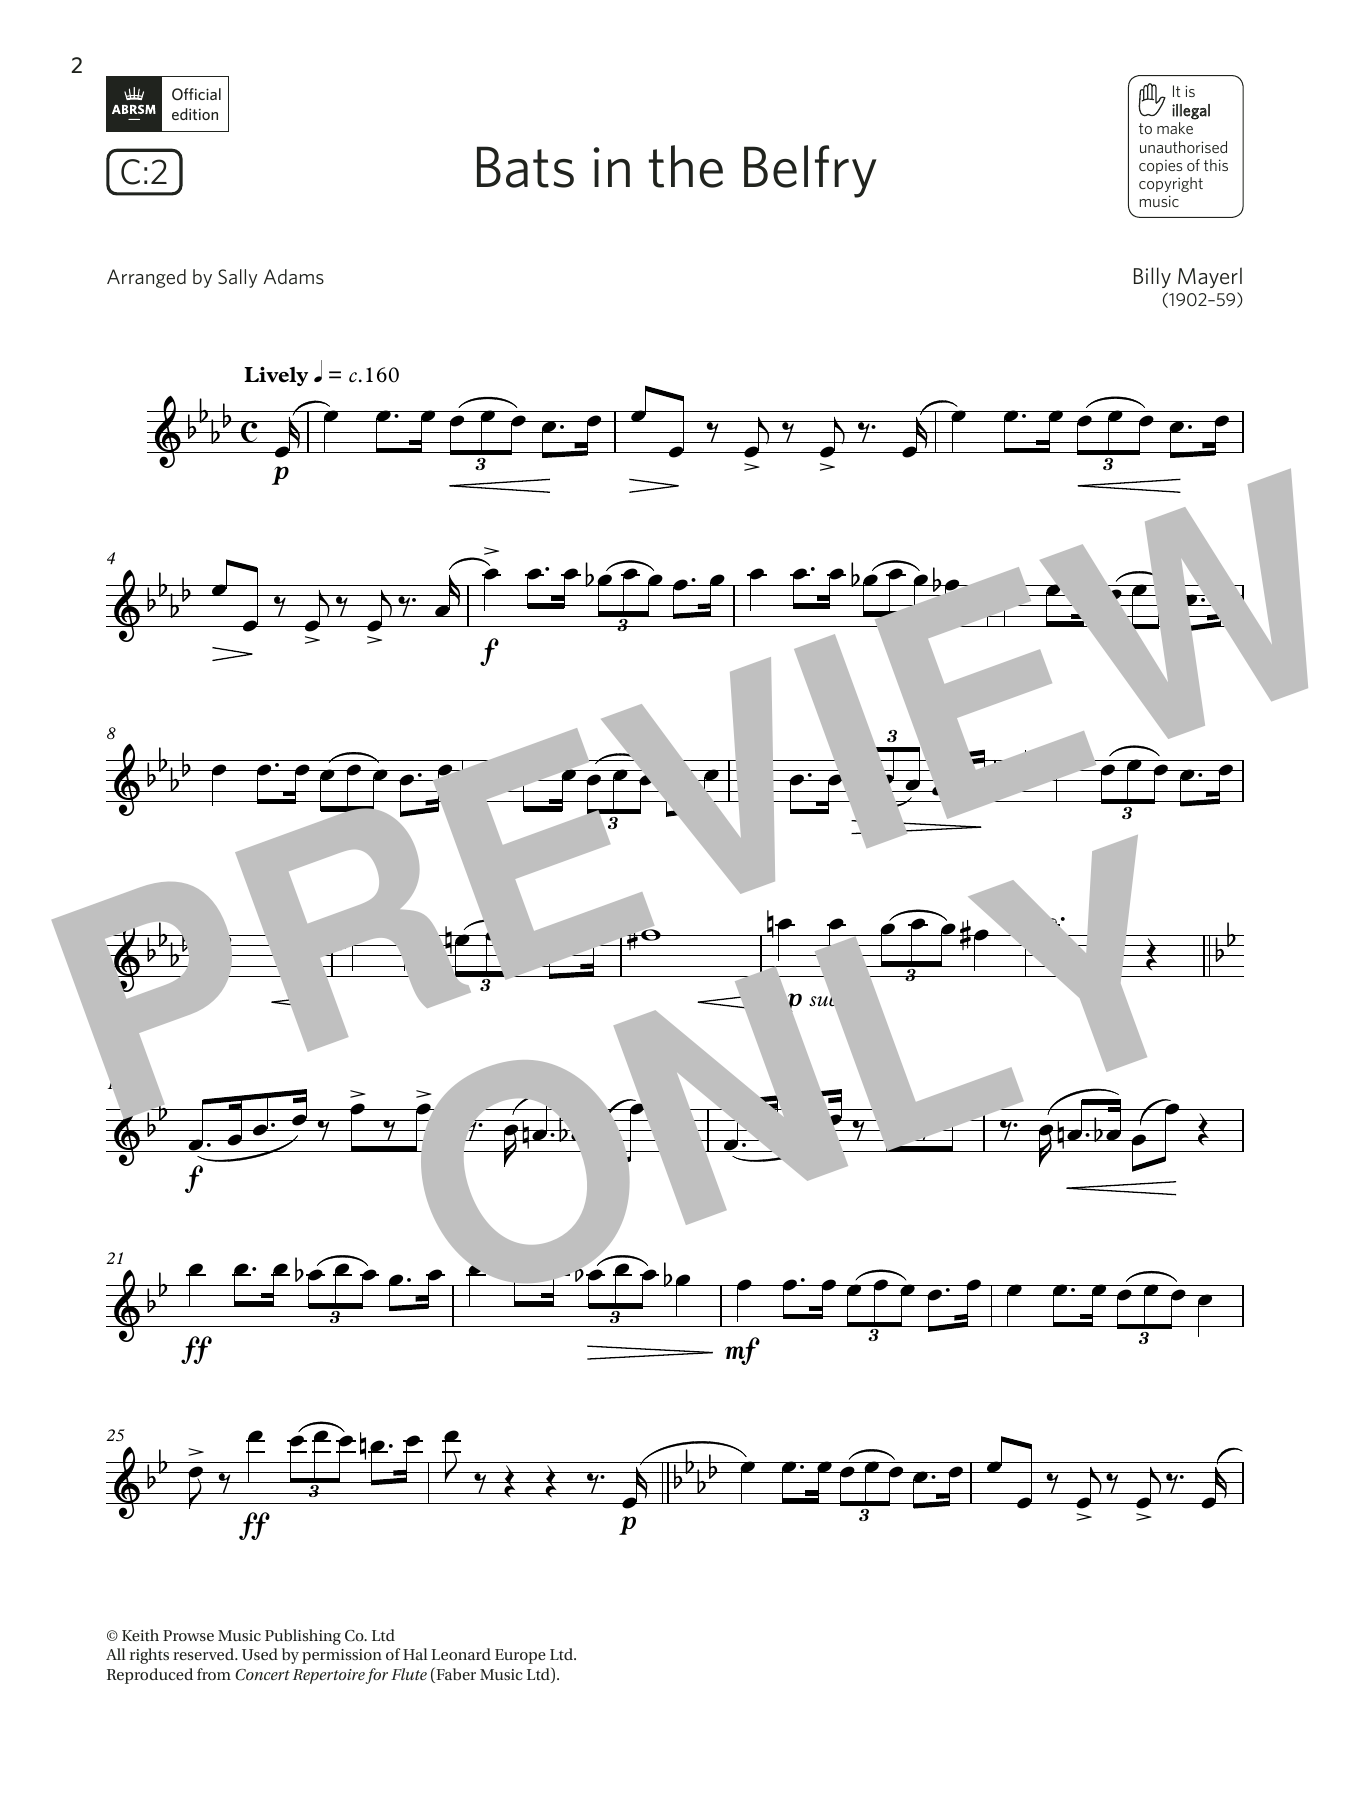 Download Billy Mayerl Bats in the Belfry (Grade 6 List C1 fr Sheet Music